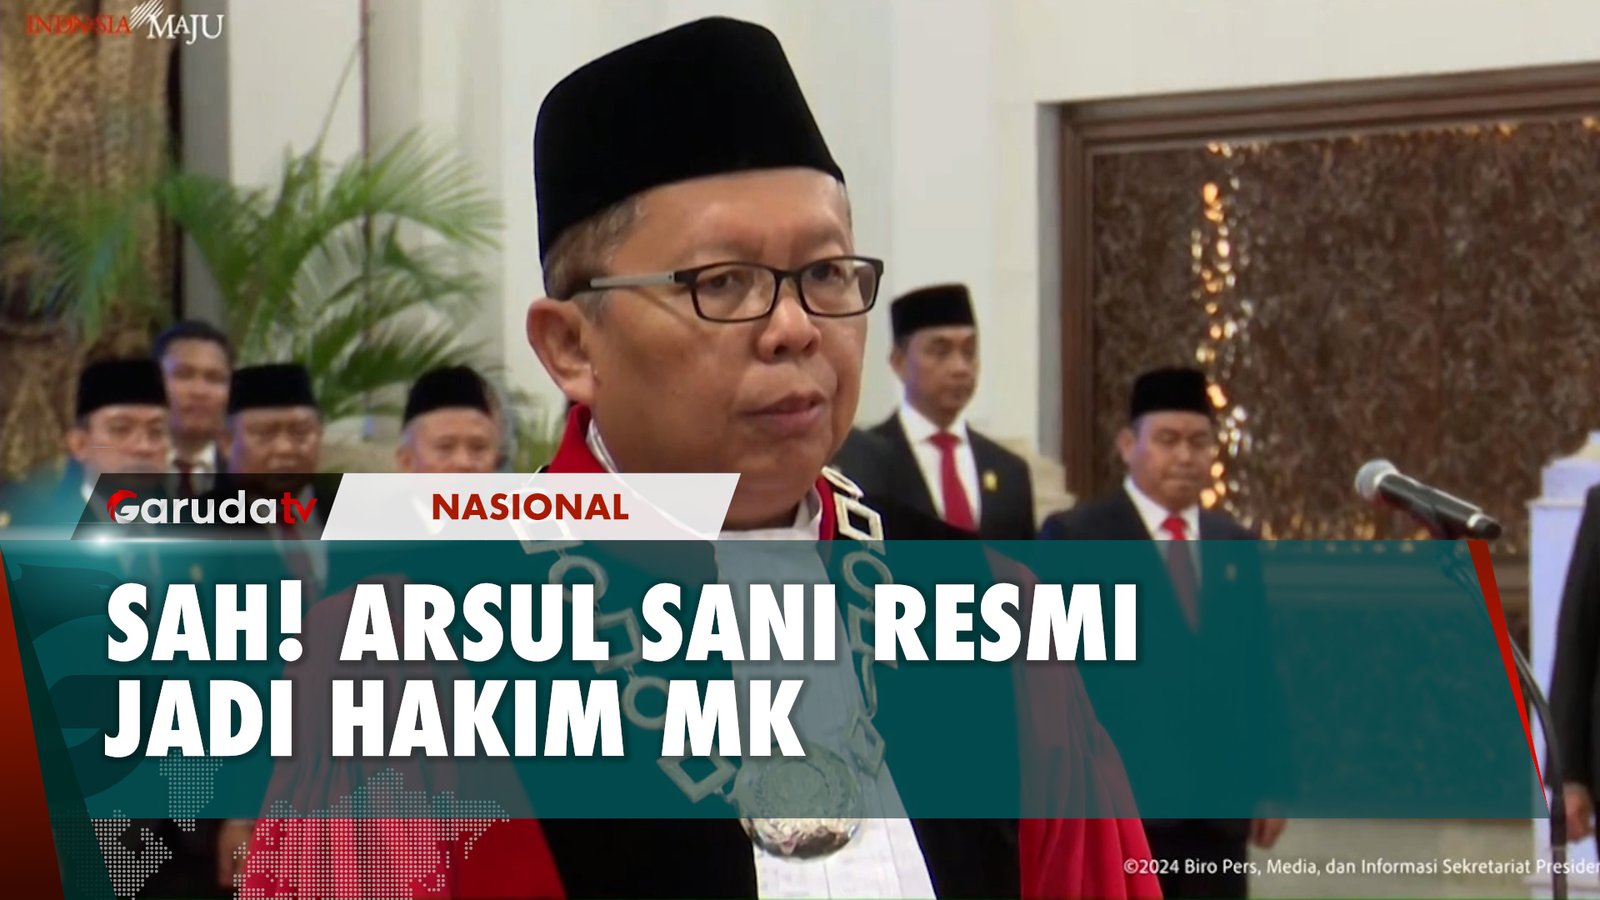 Ucap Sumpah di Depan Jokowi, Arsul Sani Resmi Jadi Hakim MK